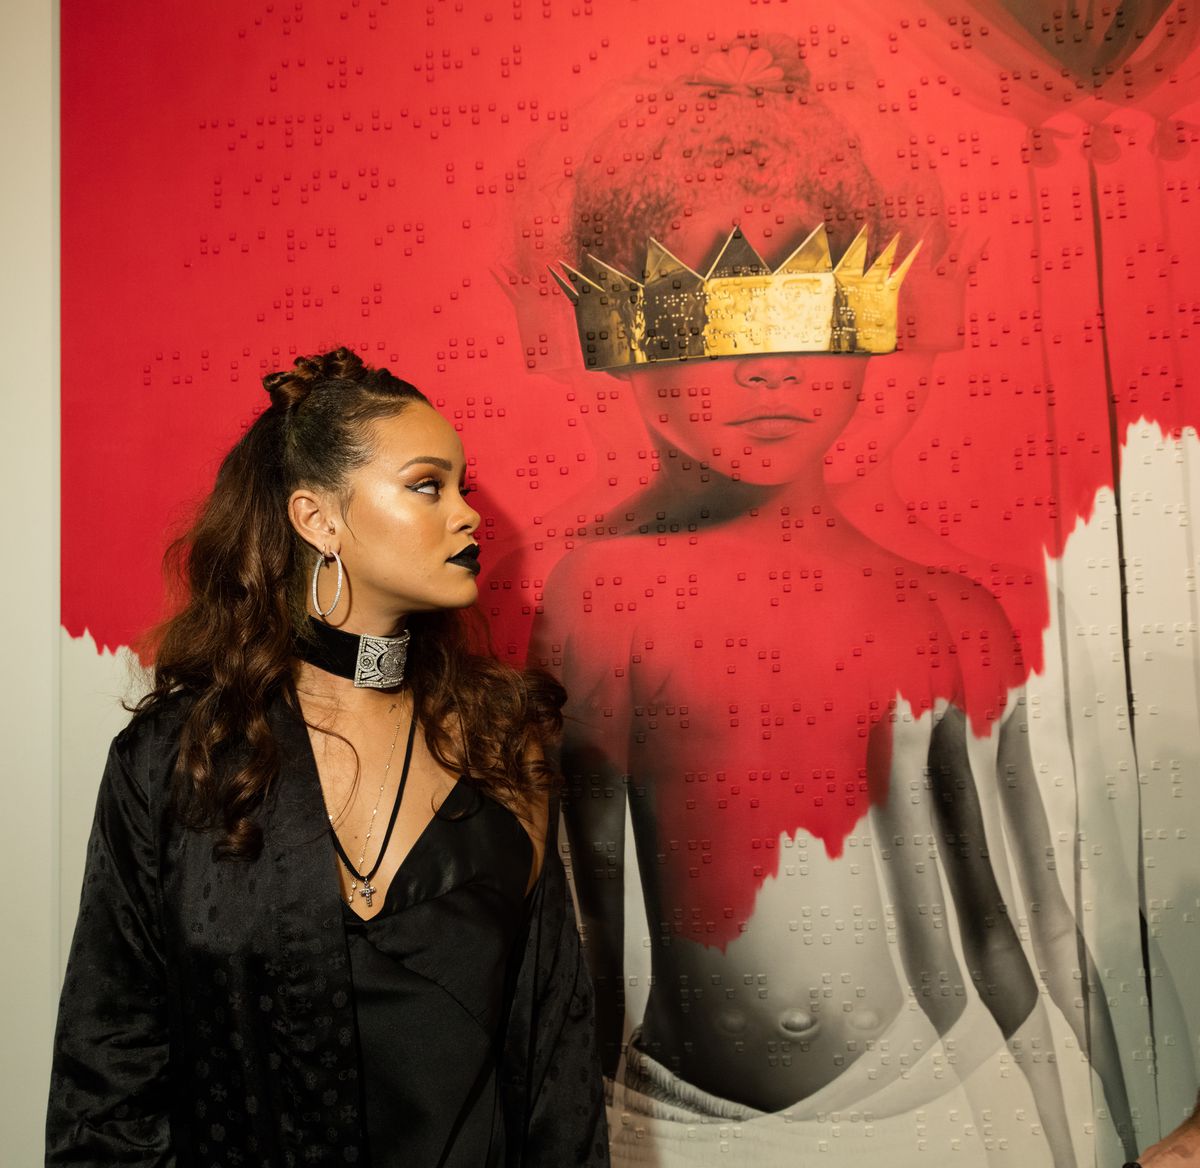 Rihanna's Anti swaps party anthems for indulgent stoner jams